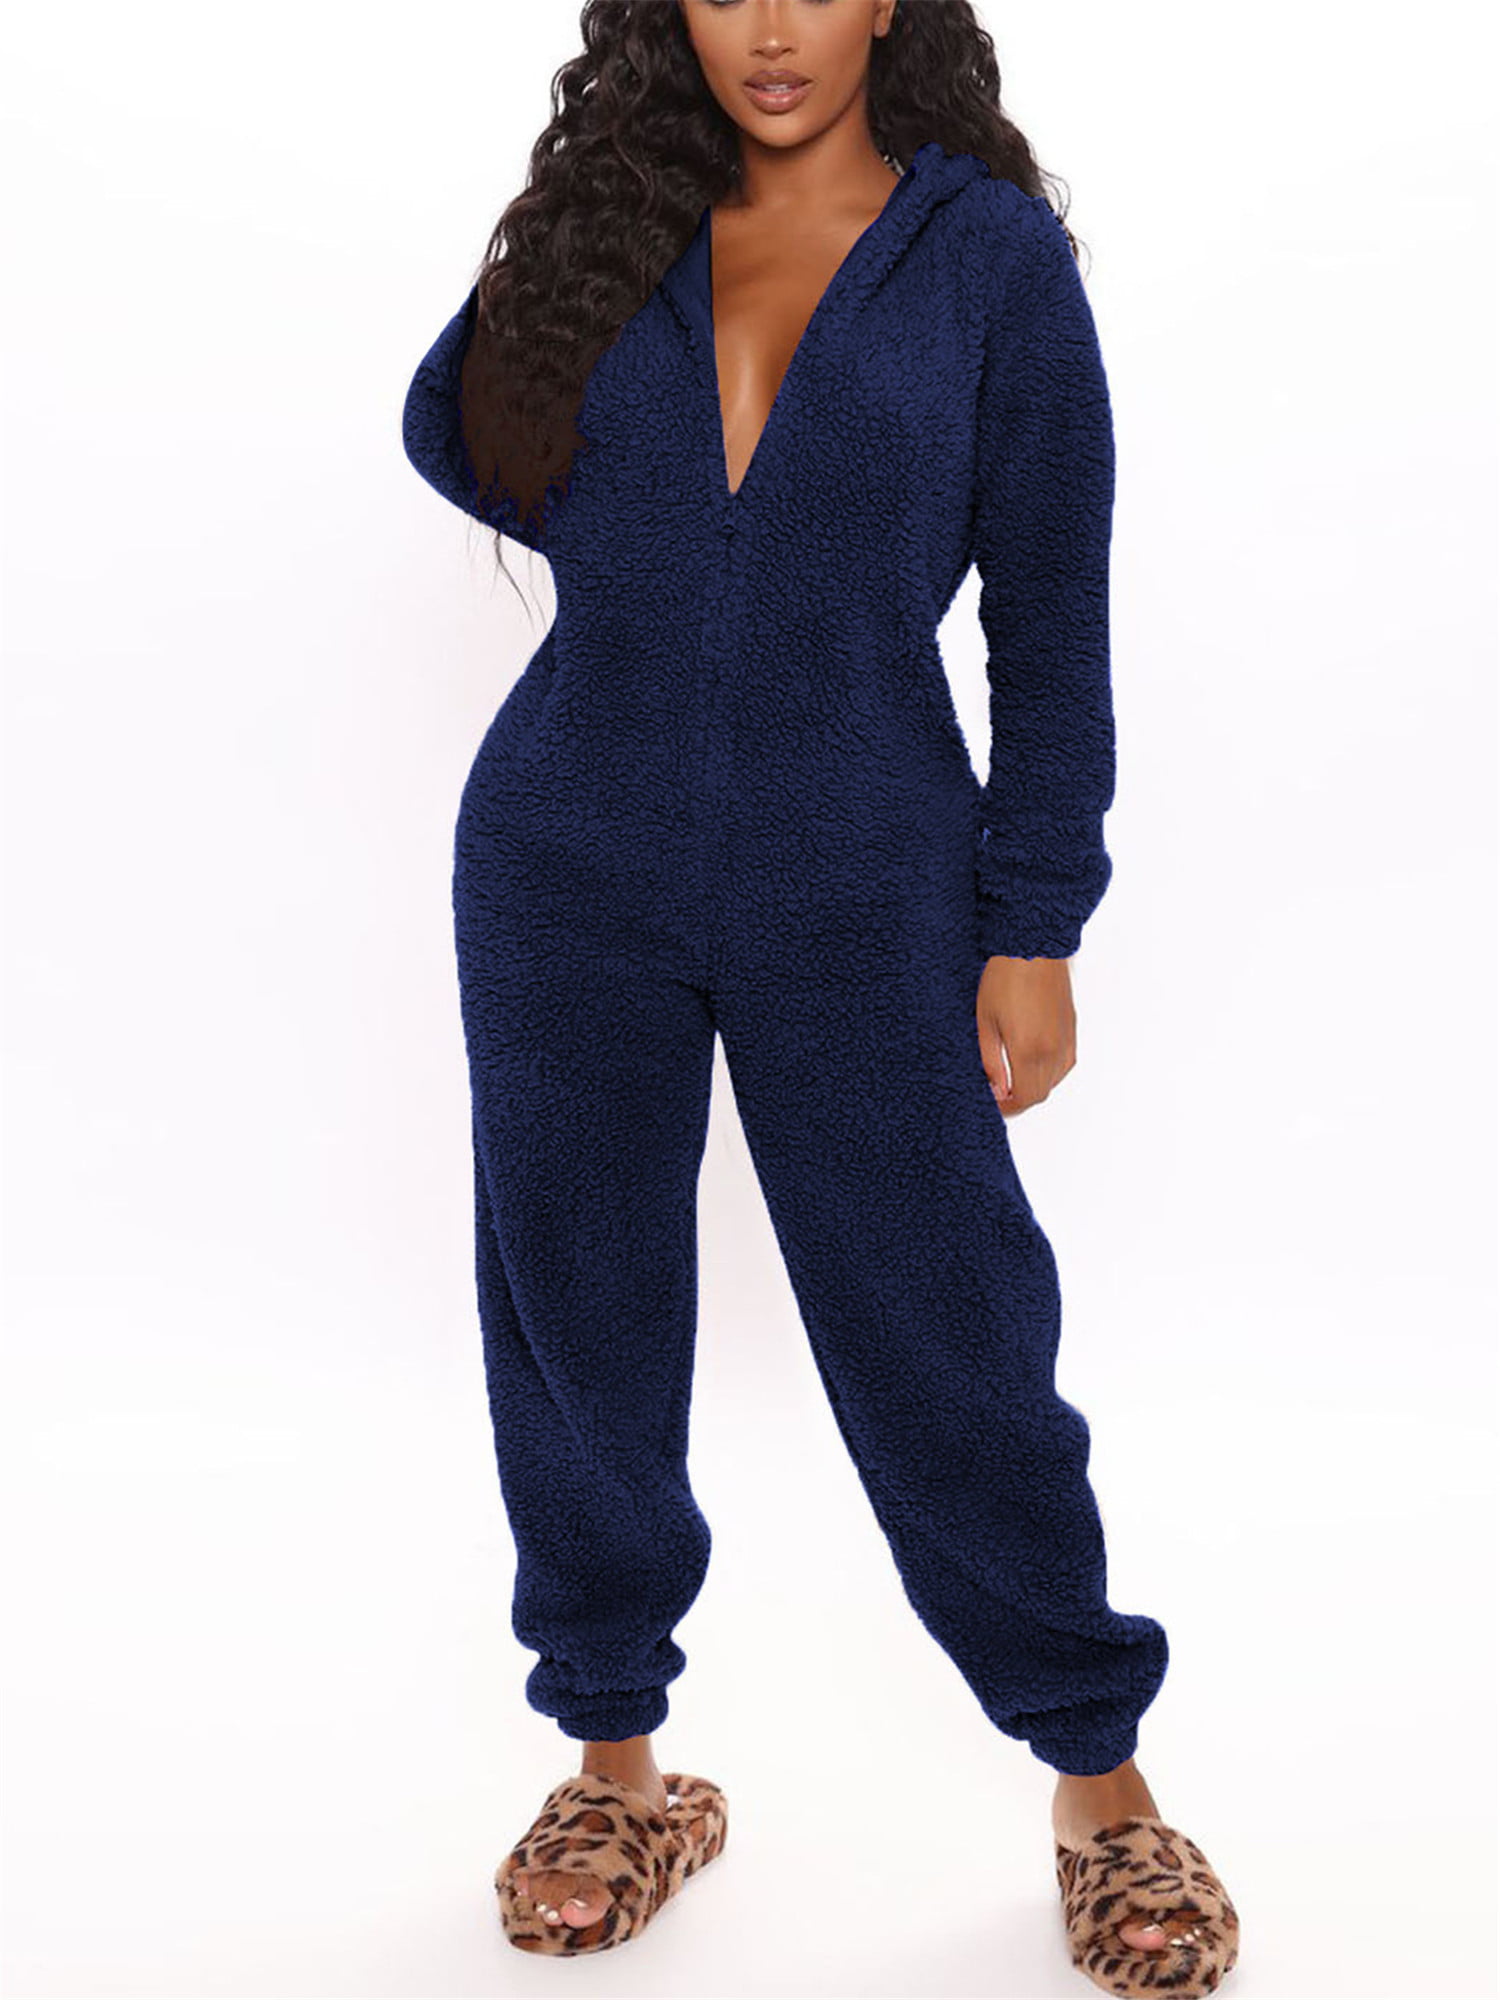 Lusofie Sleepwear Mens Onesie Thermal Underwear Lightweight One Piece Pajama Long Sleeve Jumpsuit Loungewear Black, XXL